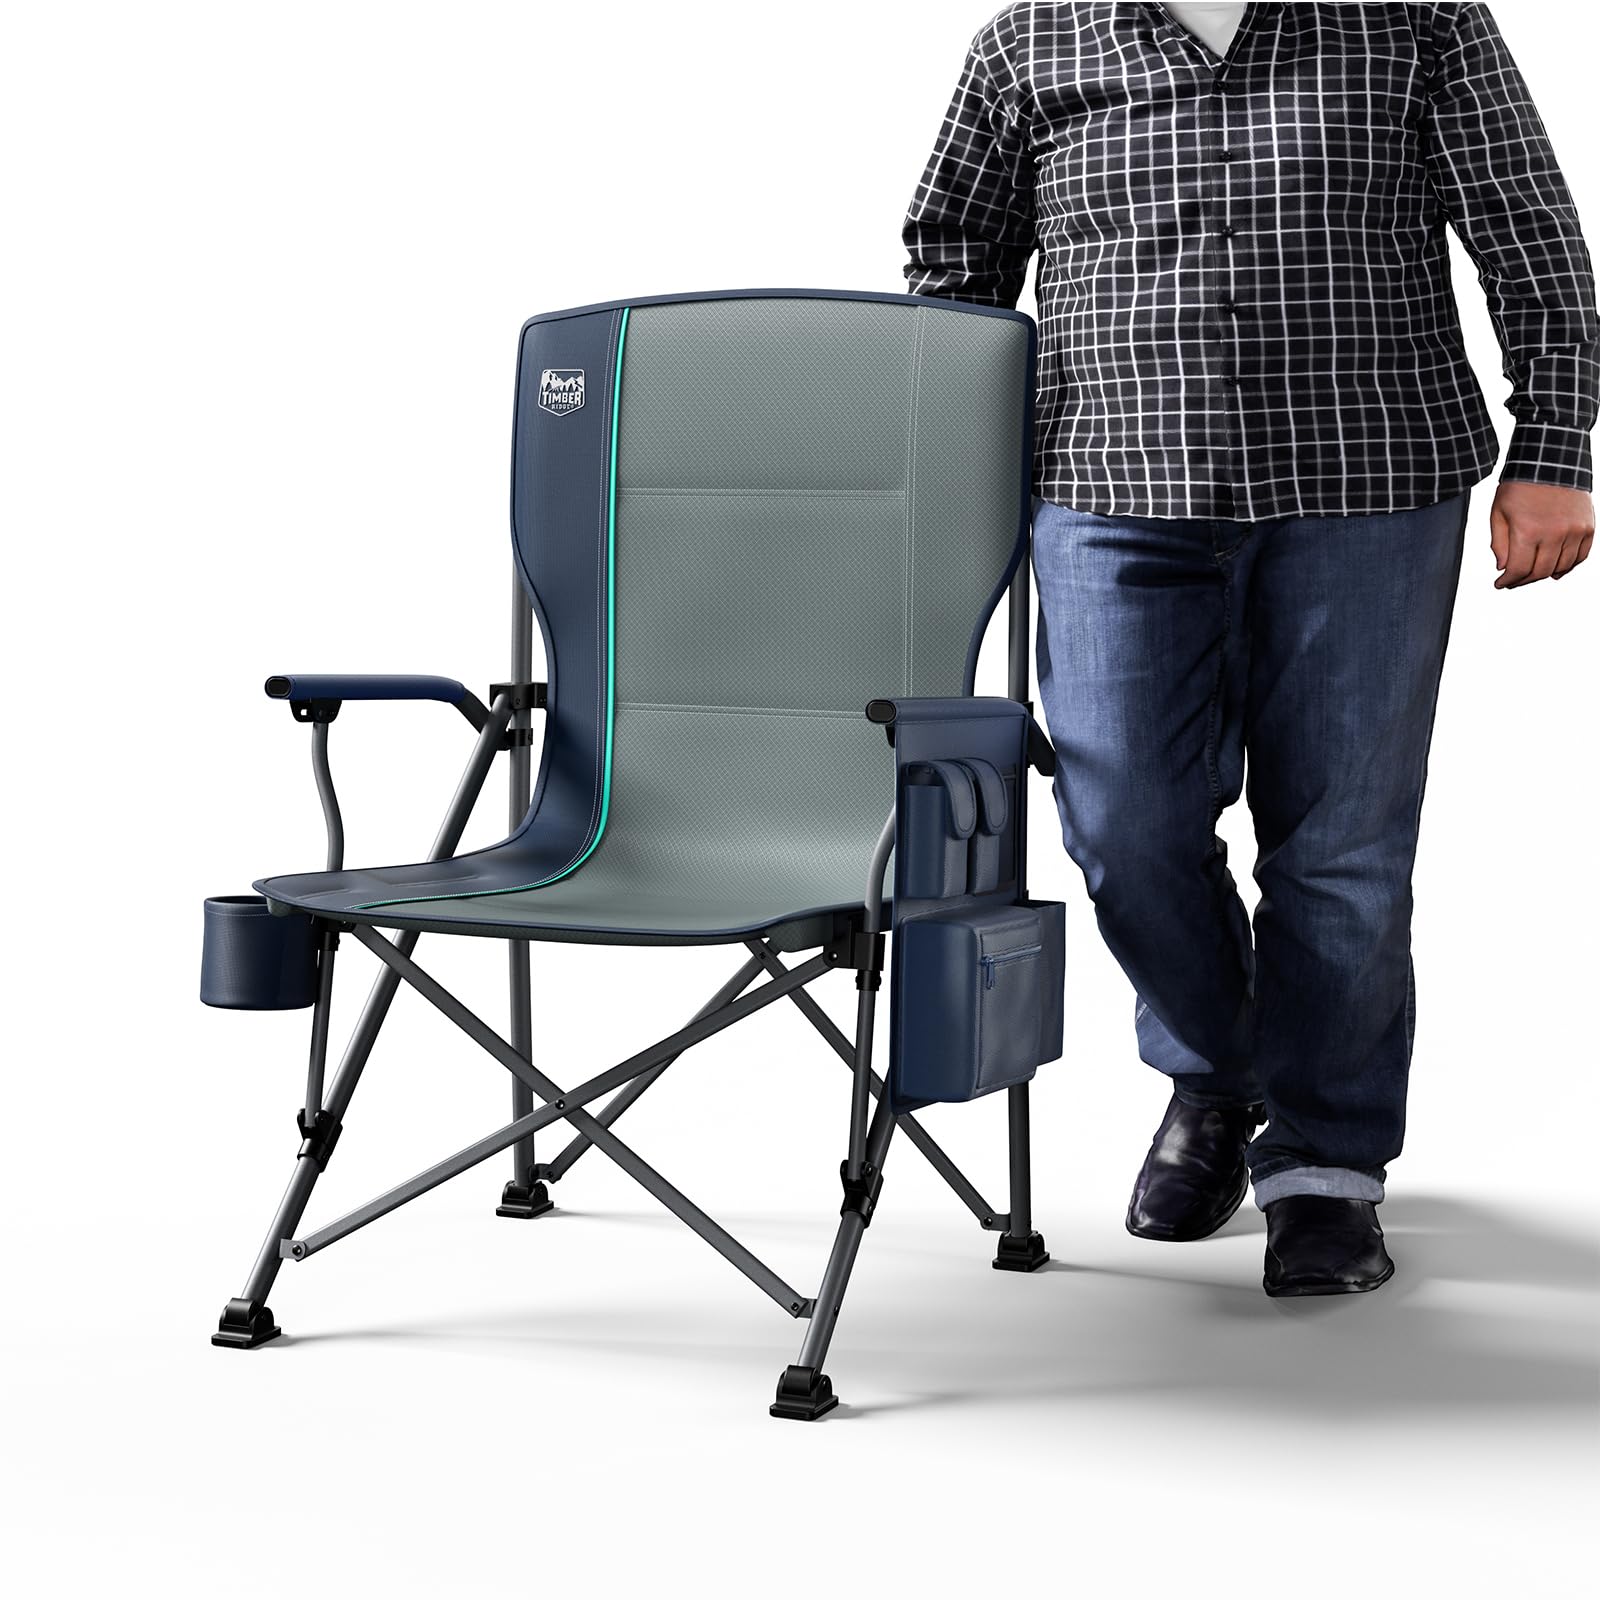 TIMBER RIDGE Oversized Folding Camping Chair